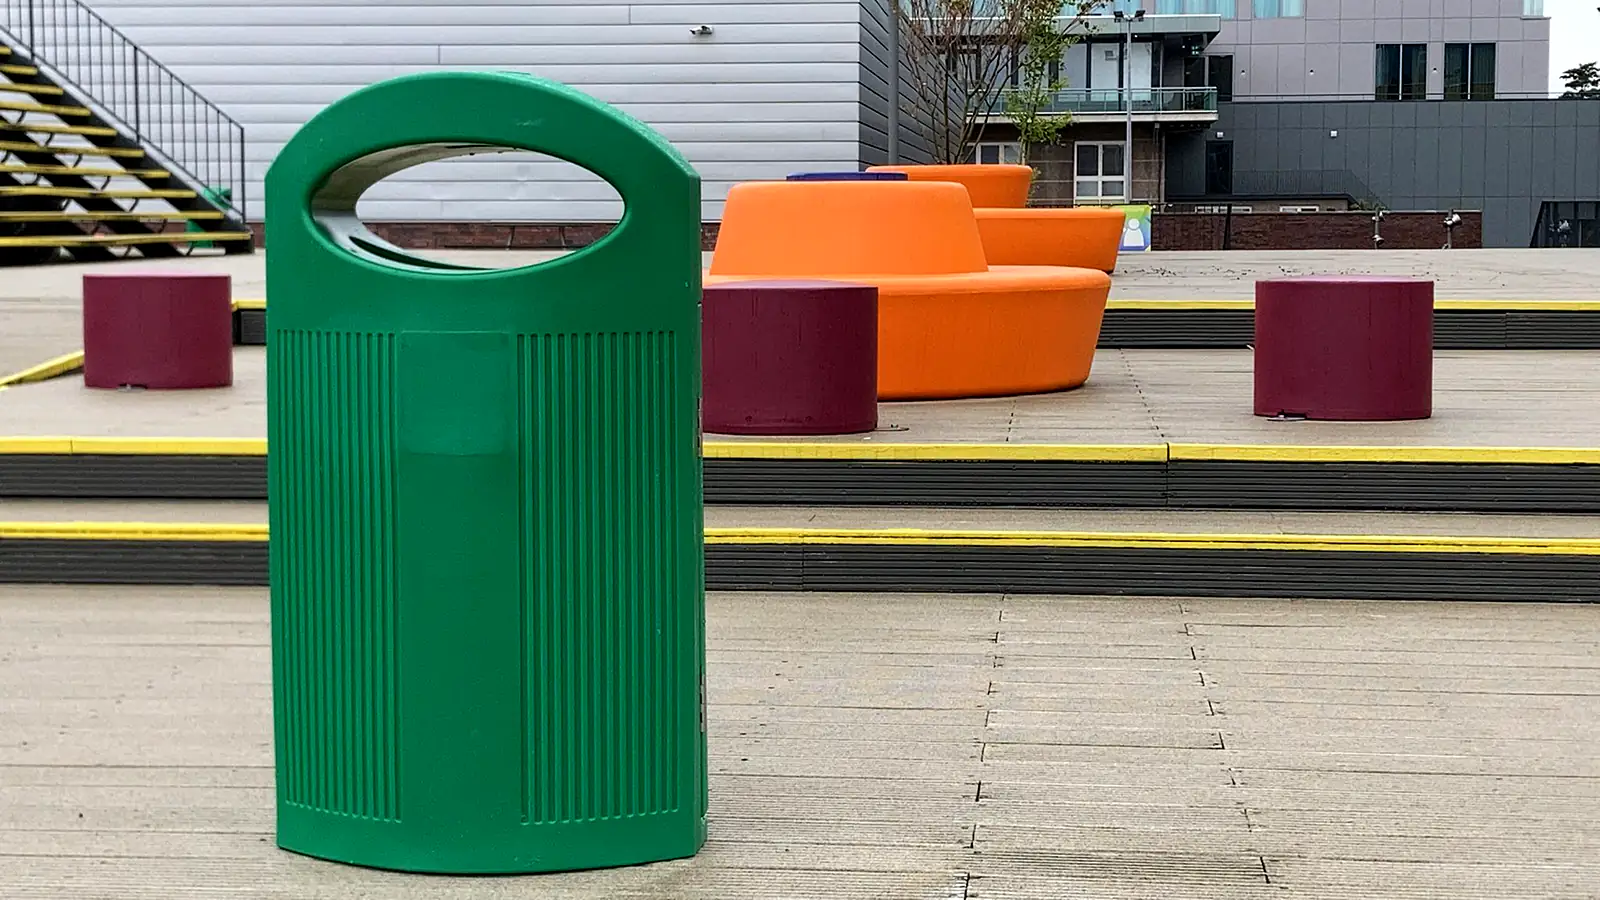 Schoolyard bins in the Netherlands